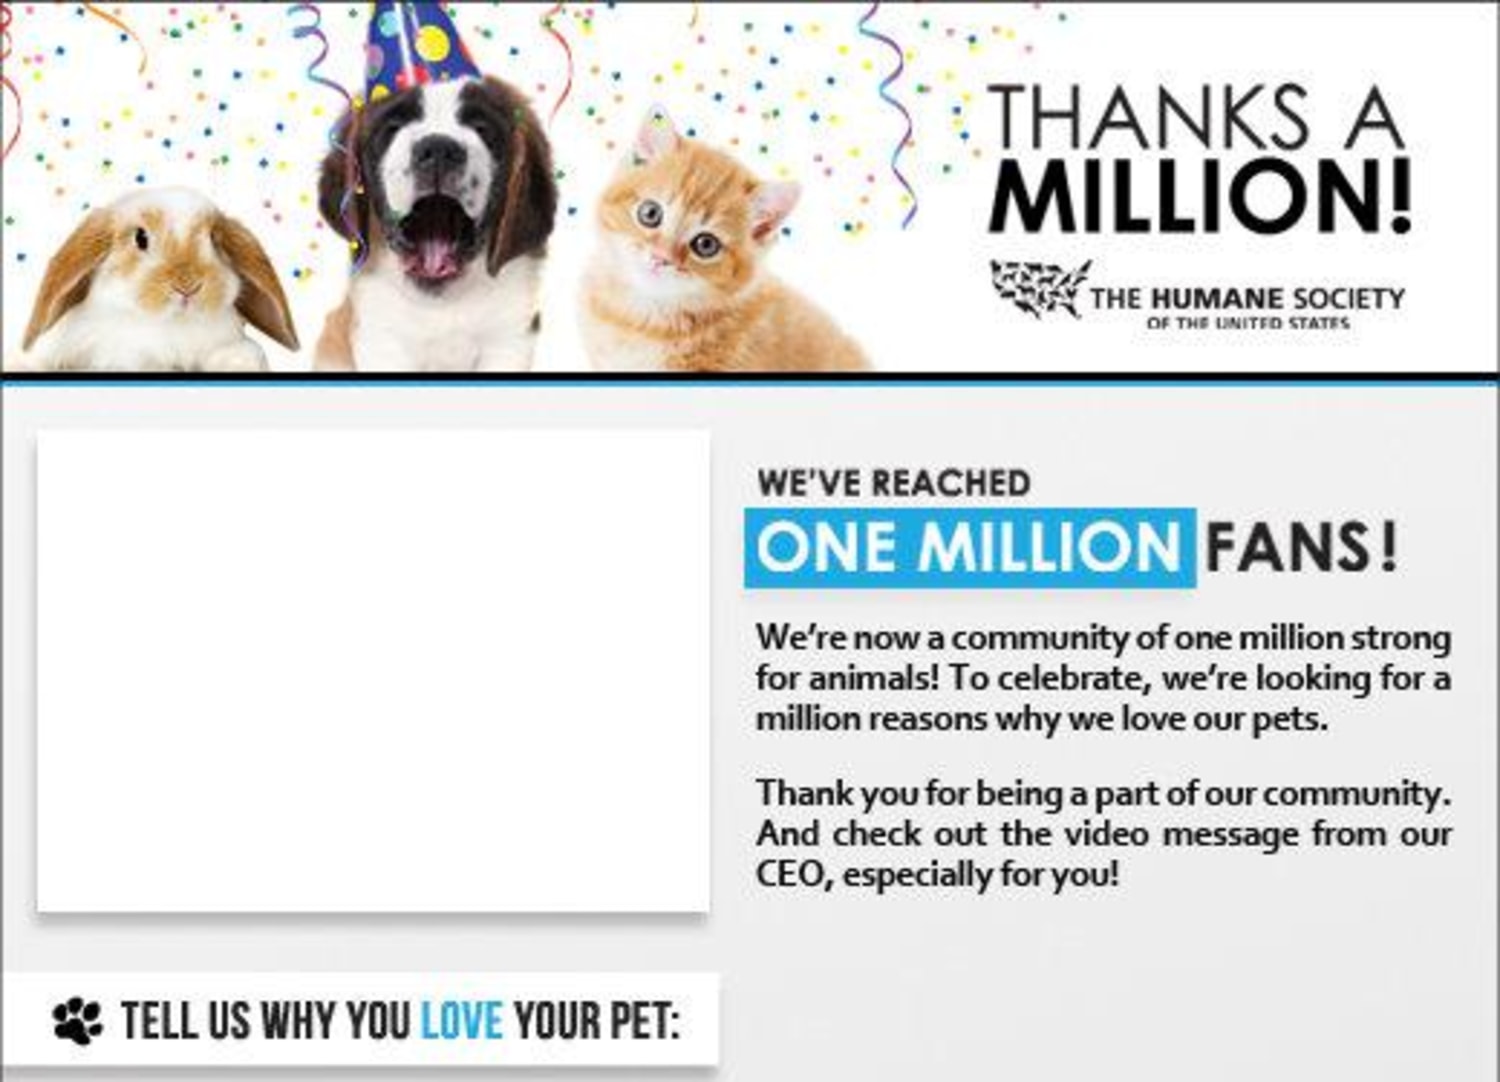 Humane Society reaches 1 million Facebook fans